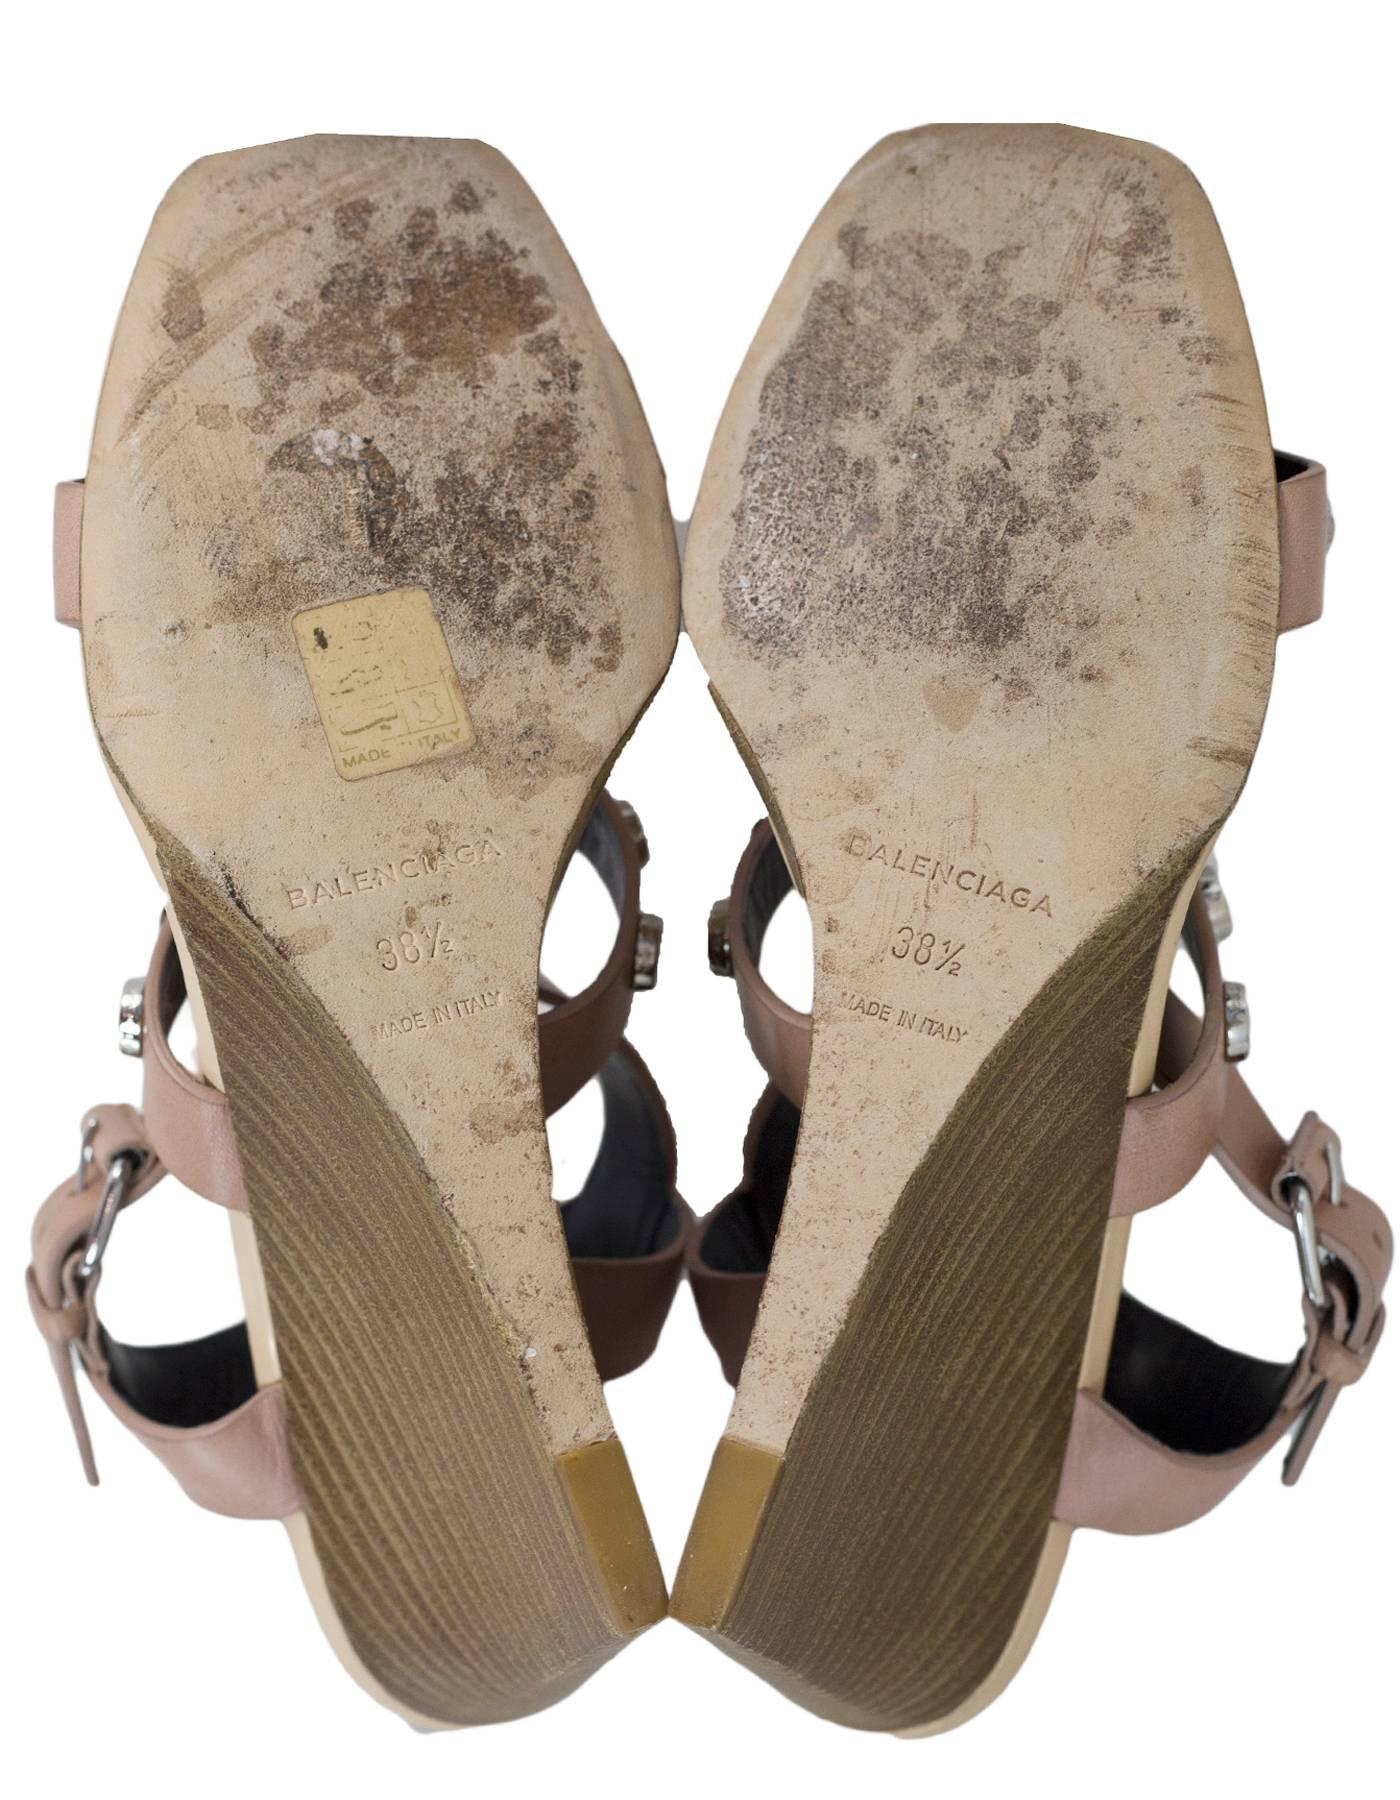 Brown Balenciaga Tan Leather Studded Wedge Sandals Sz 38.5